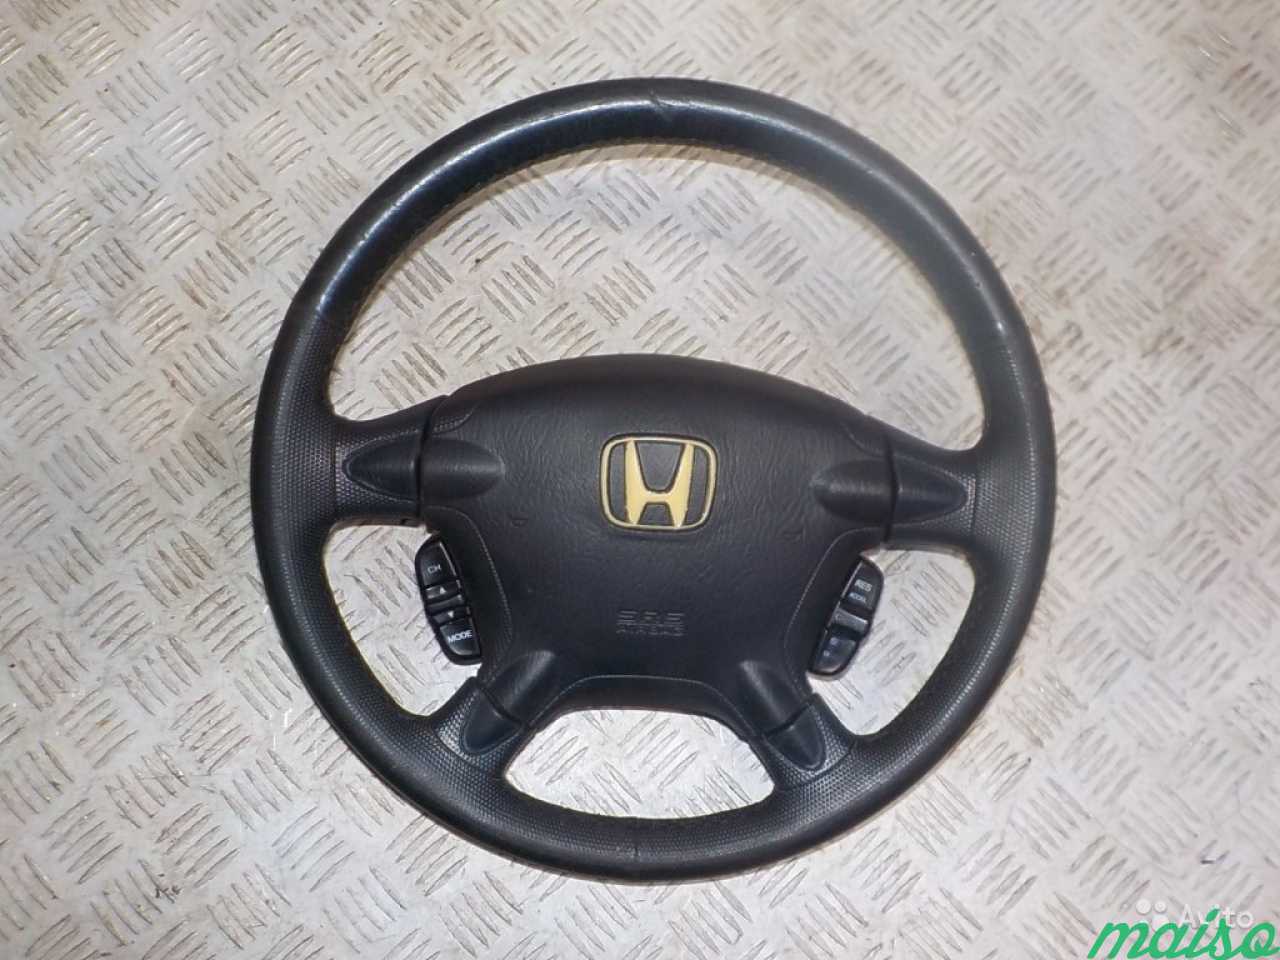 Honda crv руль. Руль CRV 1998. Анатомический руль Honda CRV 3. Руль Honda CRV 2. Хонда CR-V 1995 руль.